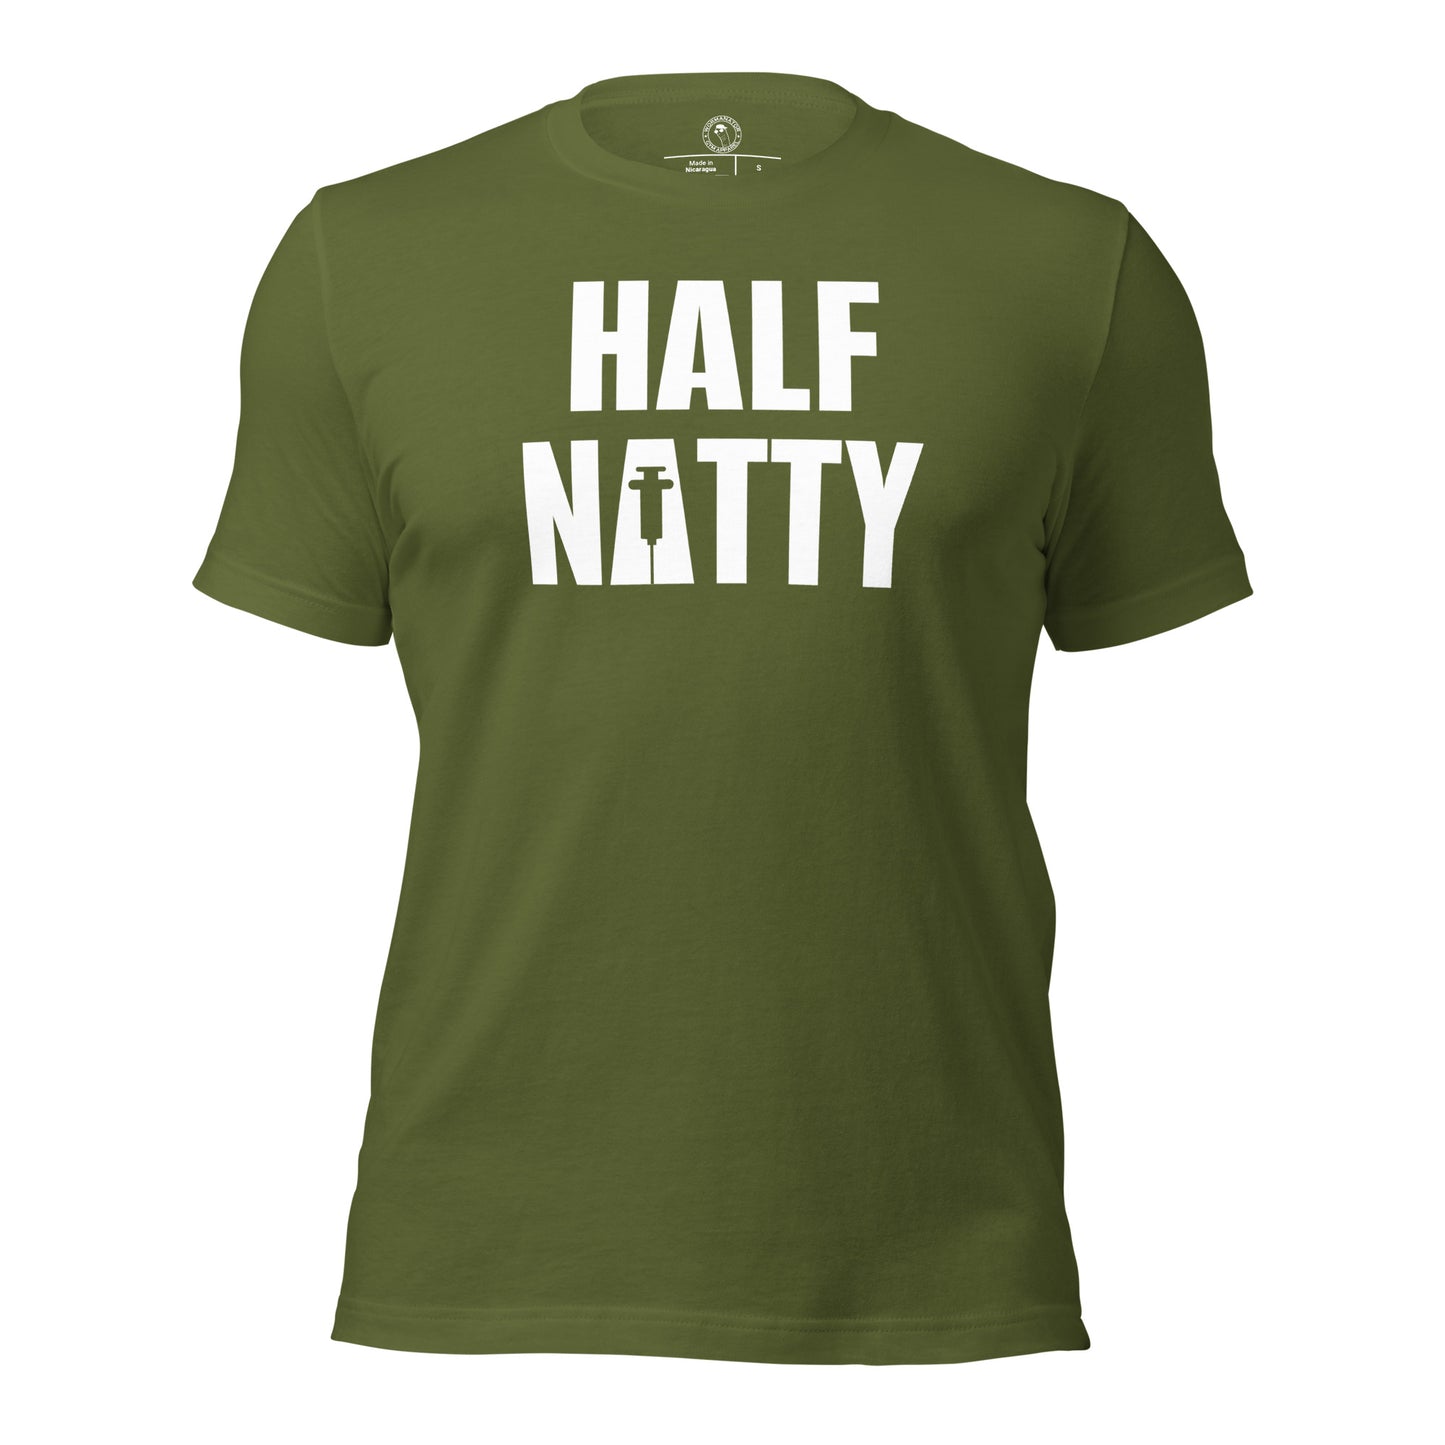 Half Natty T-Shirt in Olive